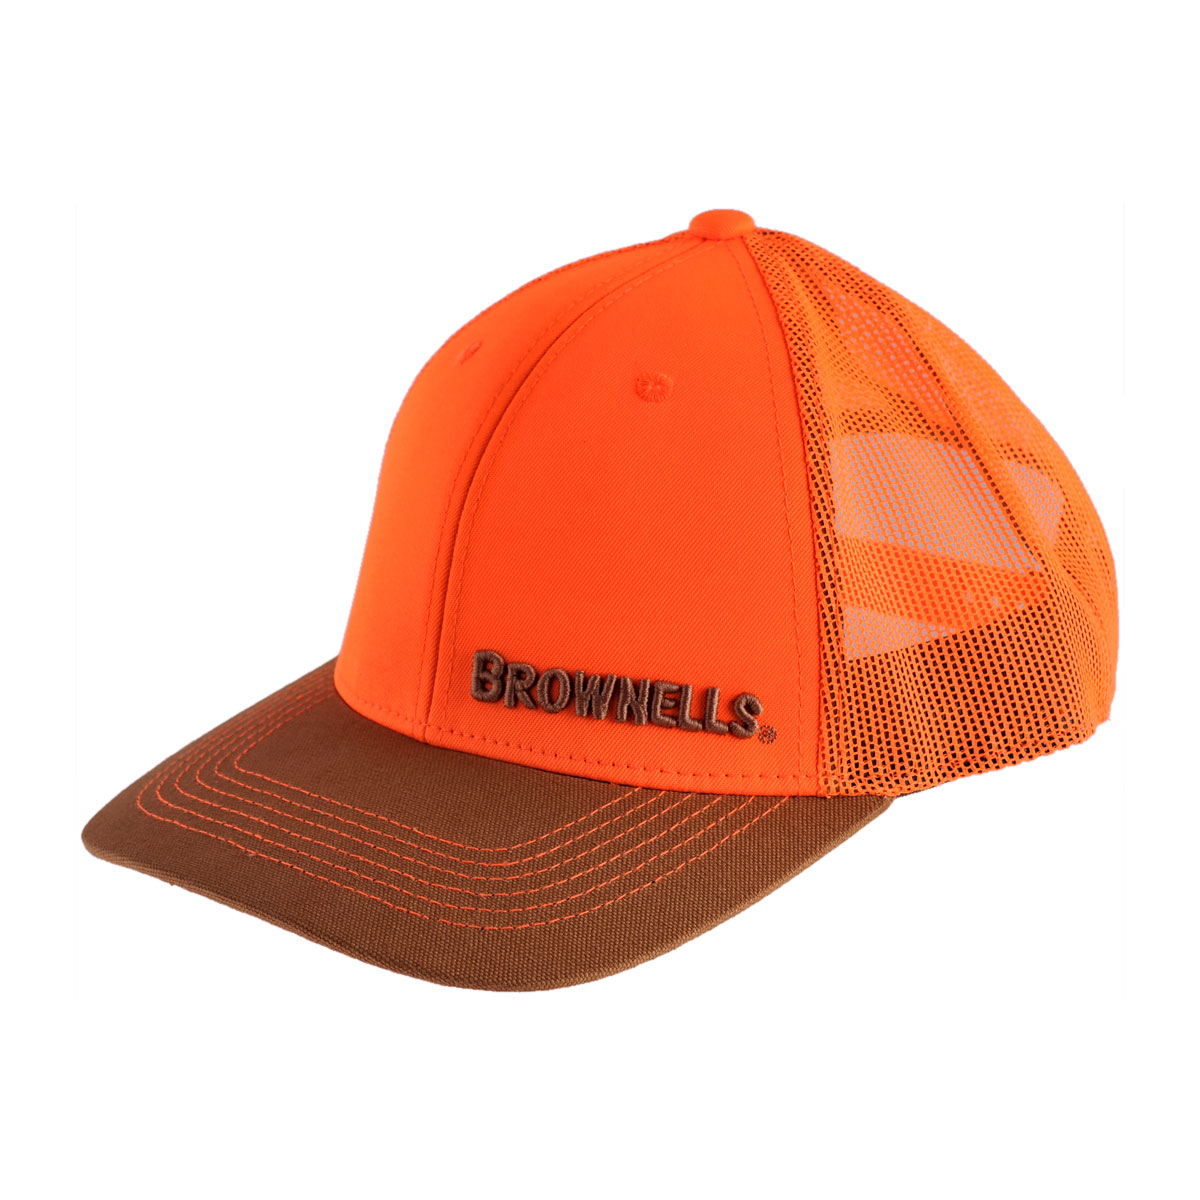 BROWNELLS - HUNTER ORANGE CAP WITH BROWNELLS LOGO